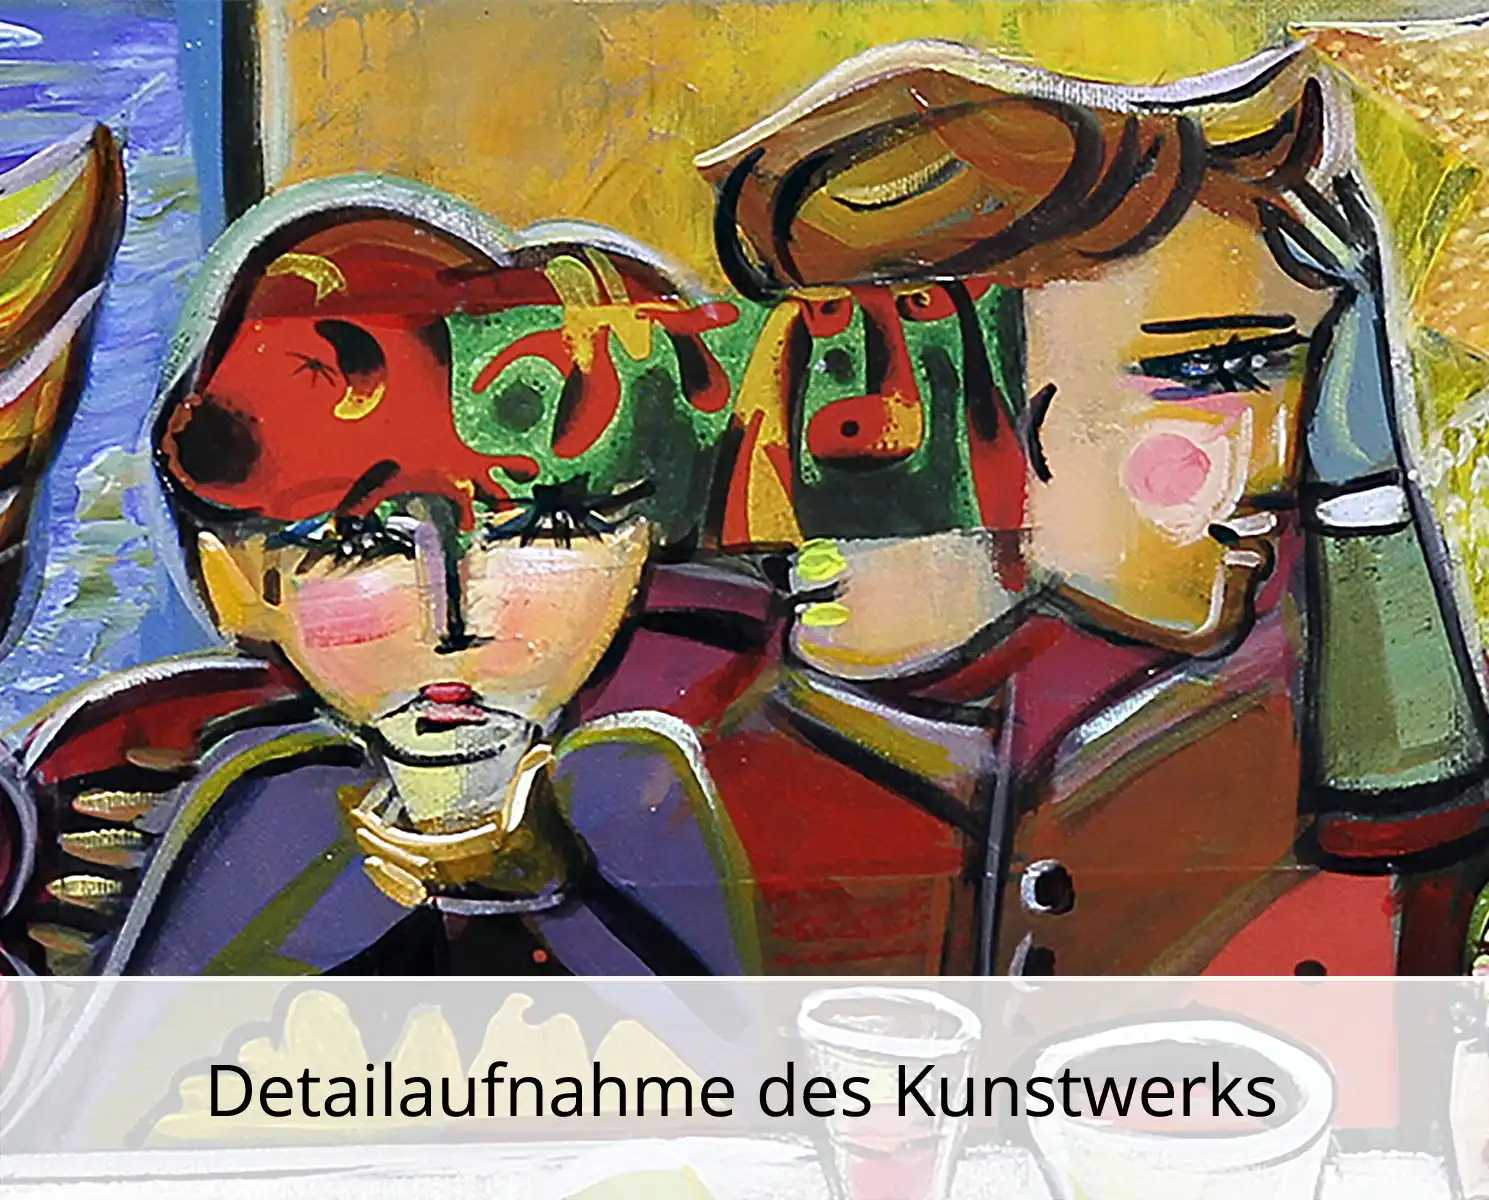 Kunstdruck, signiert: "Drinking with Friends III", K. Namazi, Edition, Nr. 1/100